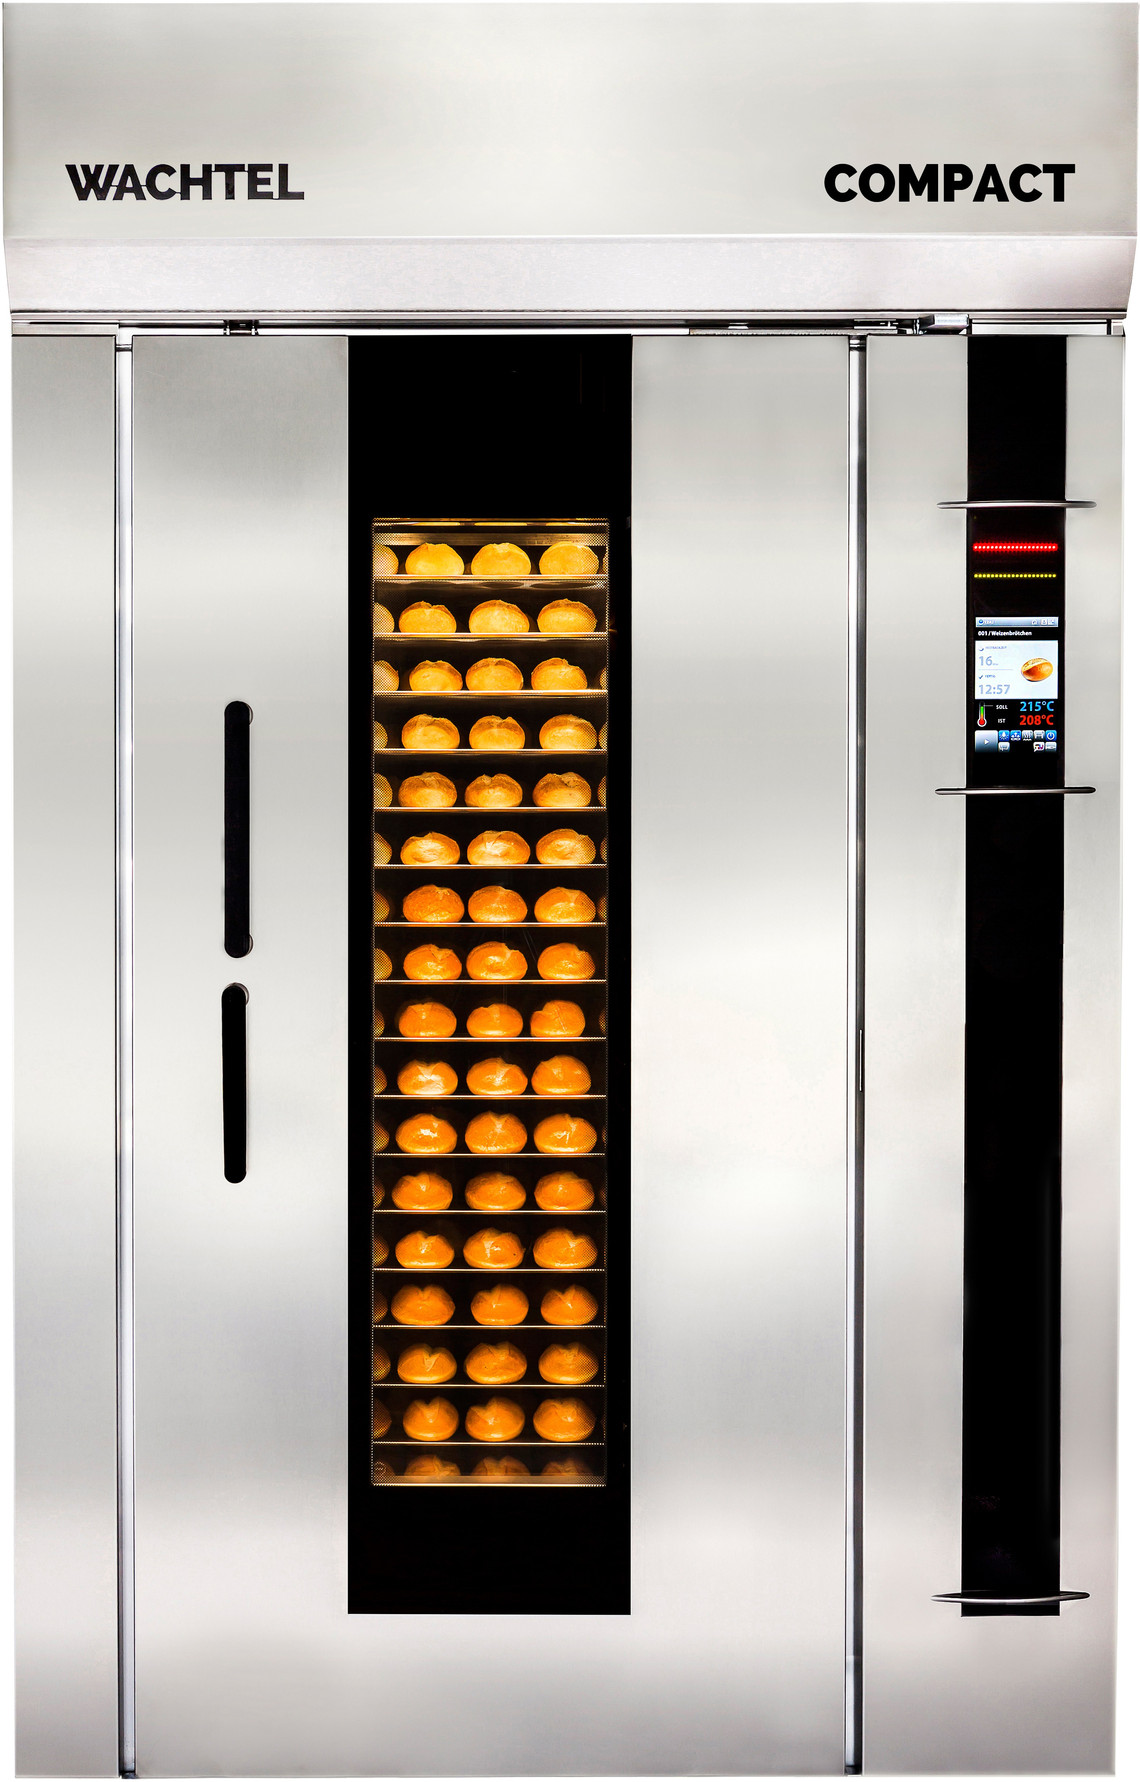 Rotary motion ovens Compact 1.8 Wachtel - Foodbay.com